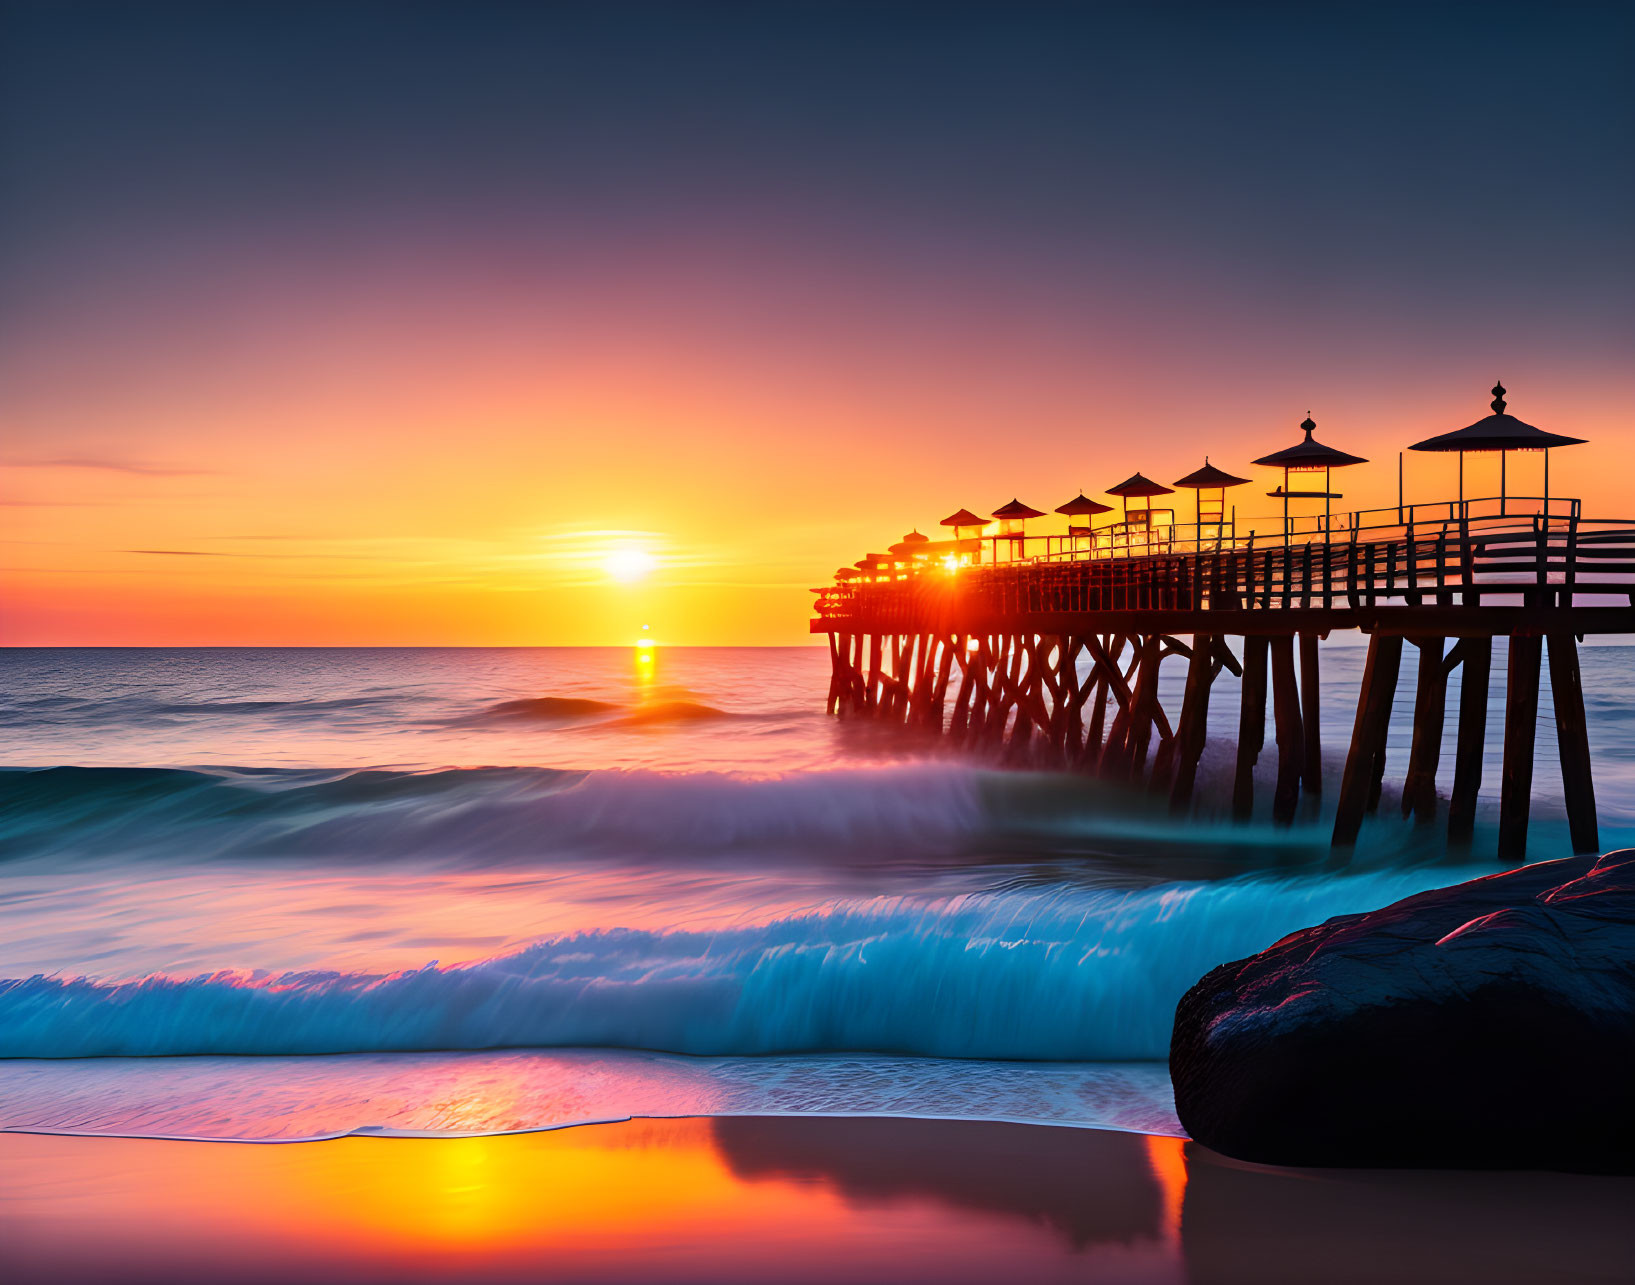 Sunset on a beach with a pier